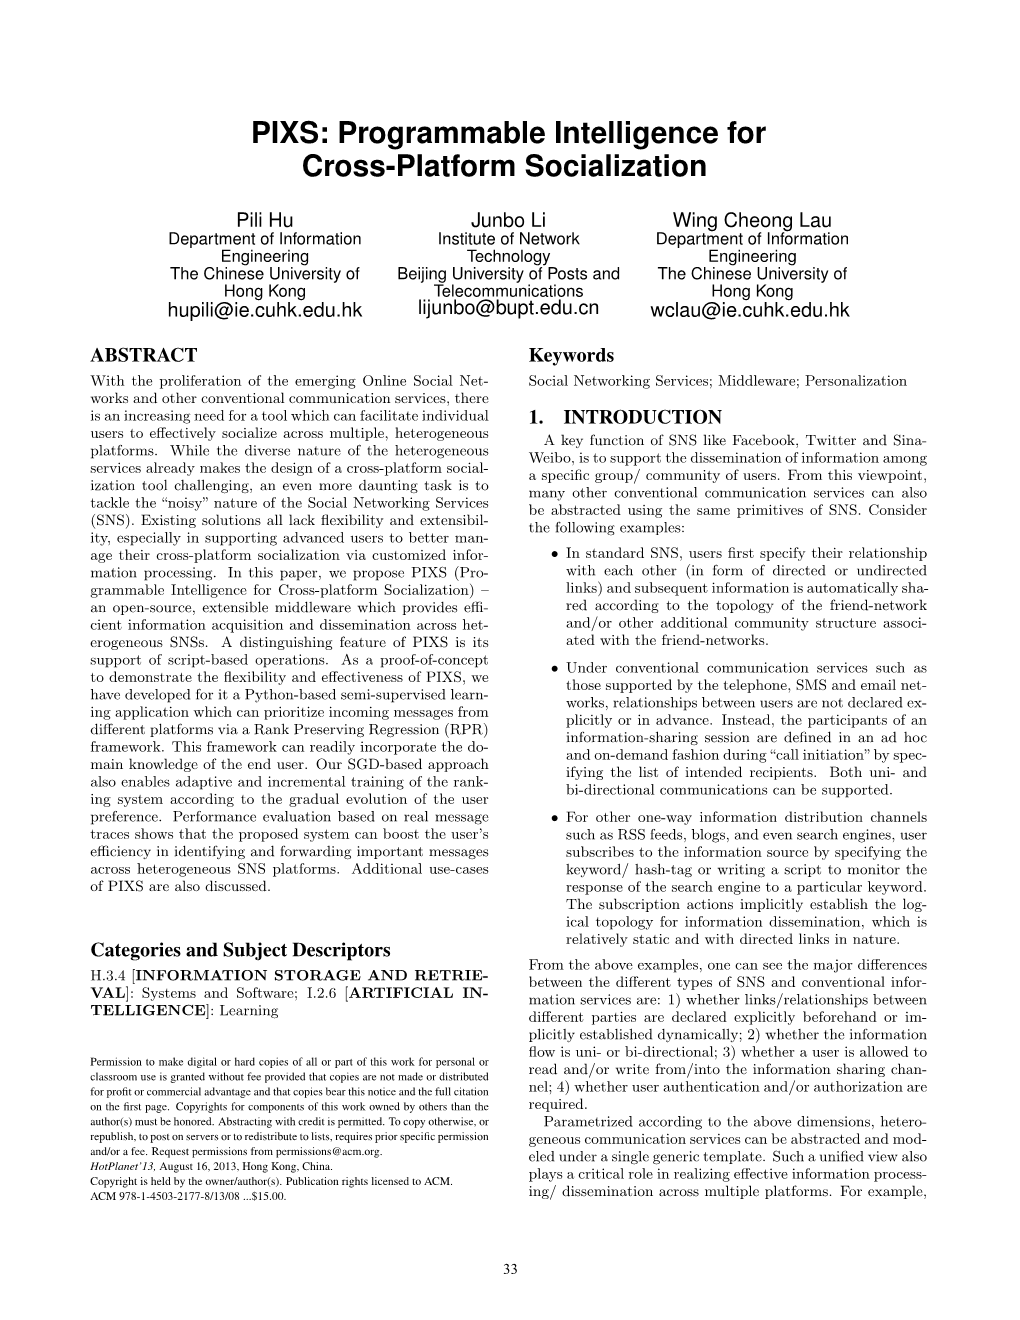 PIXS: Programmable Intelligence for Cross-Platform Socialization